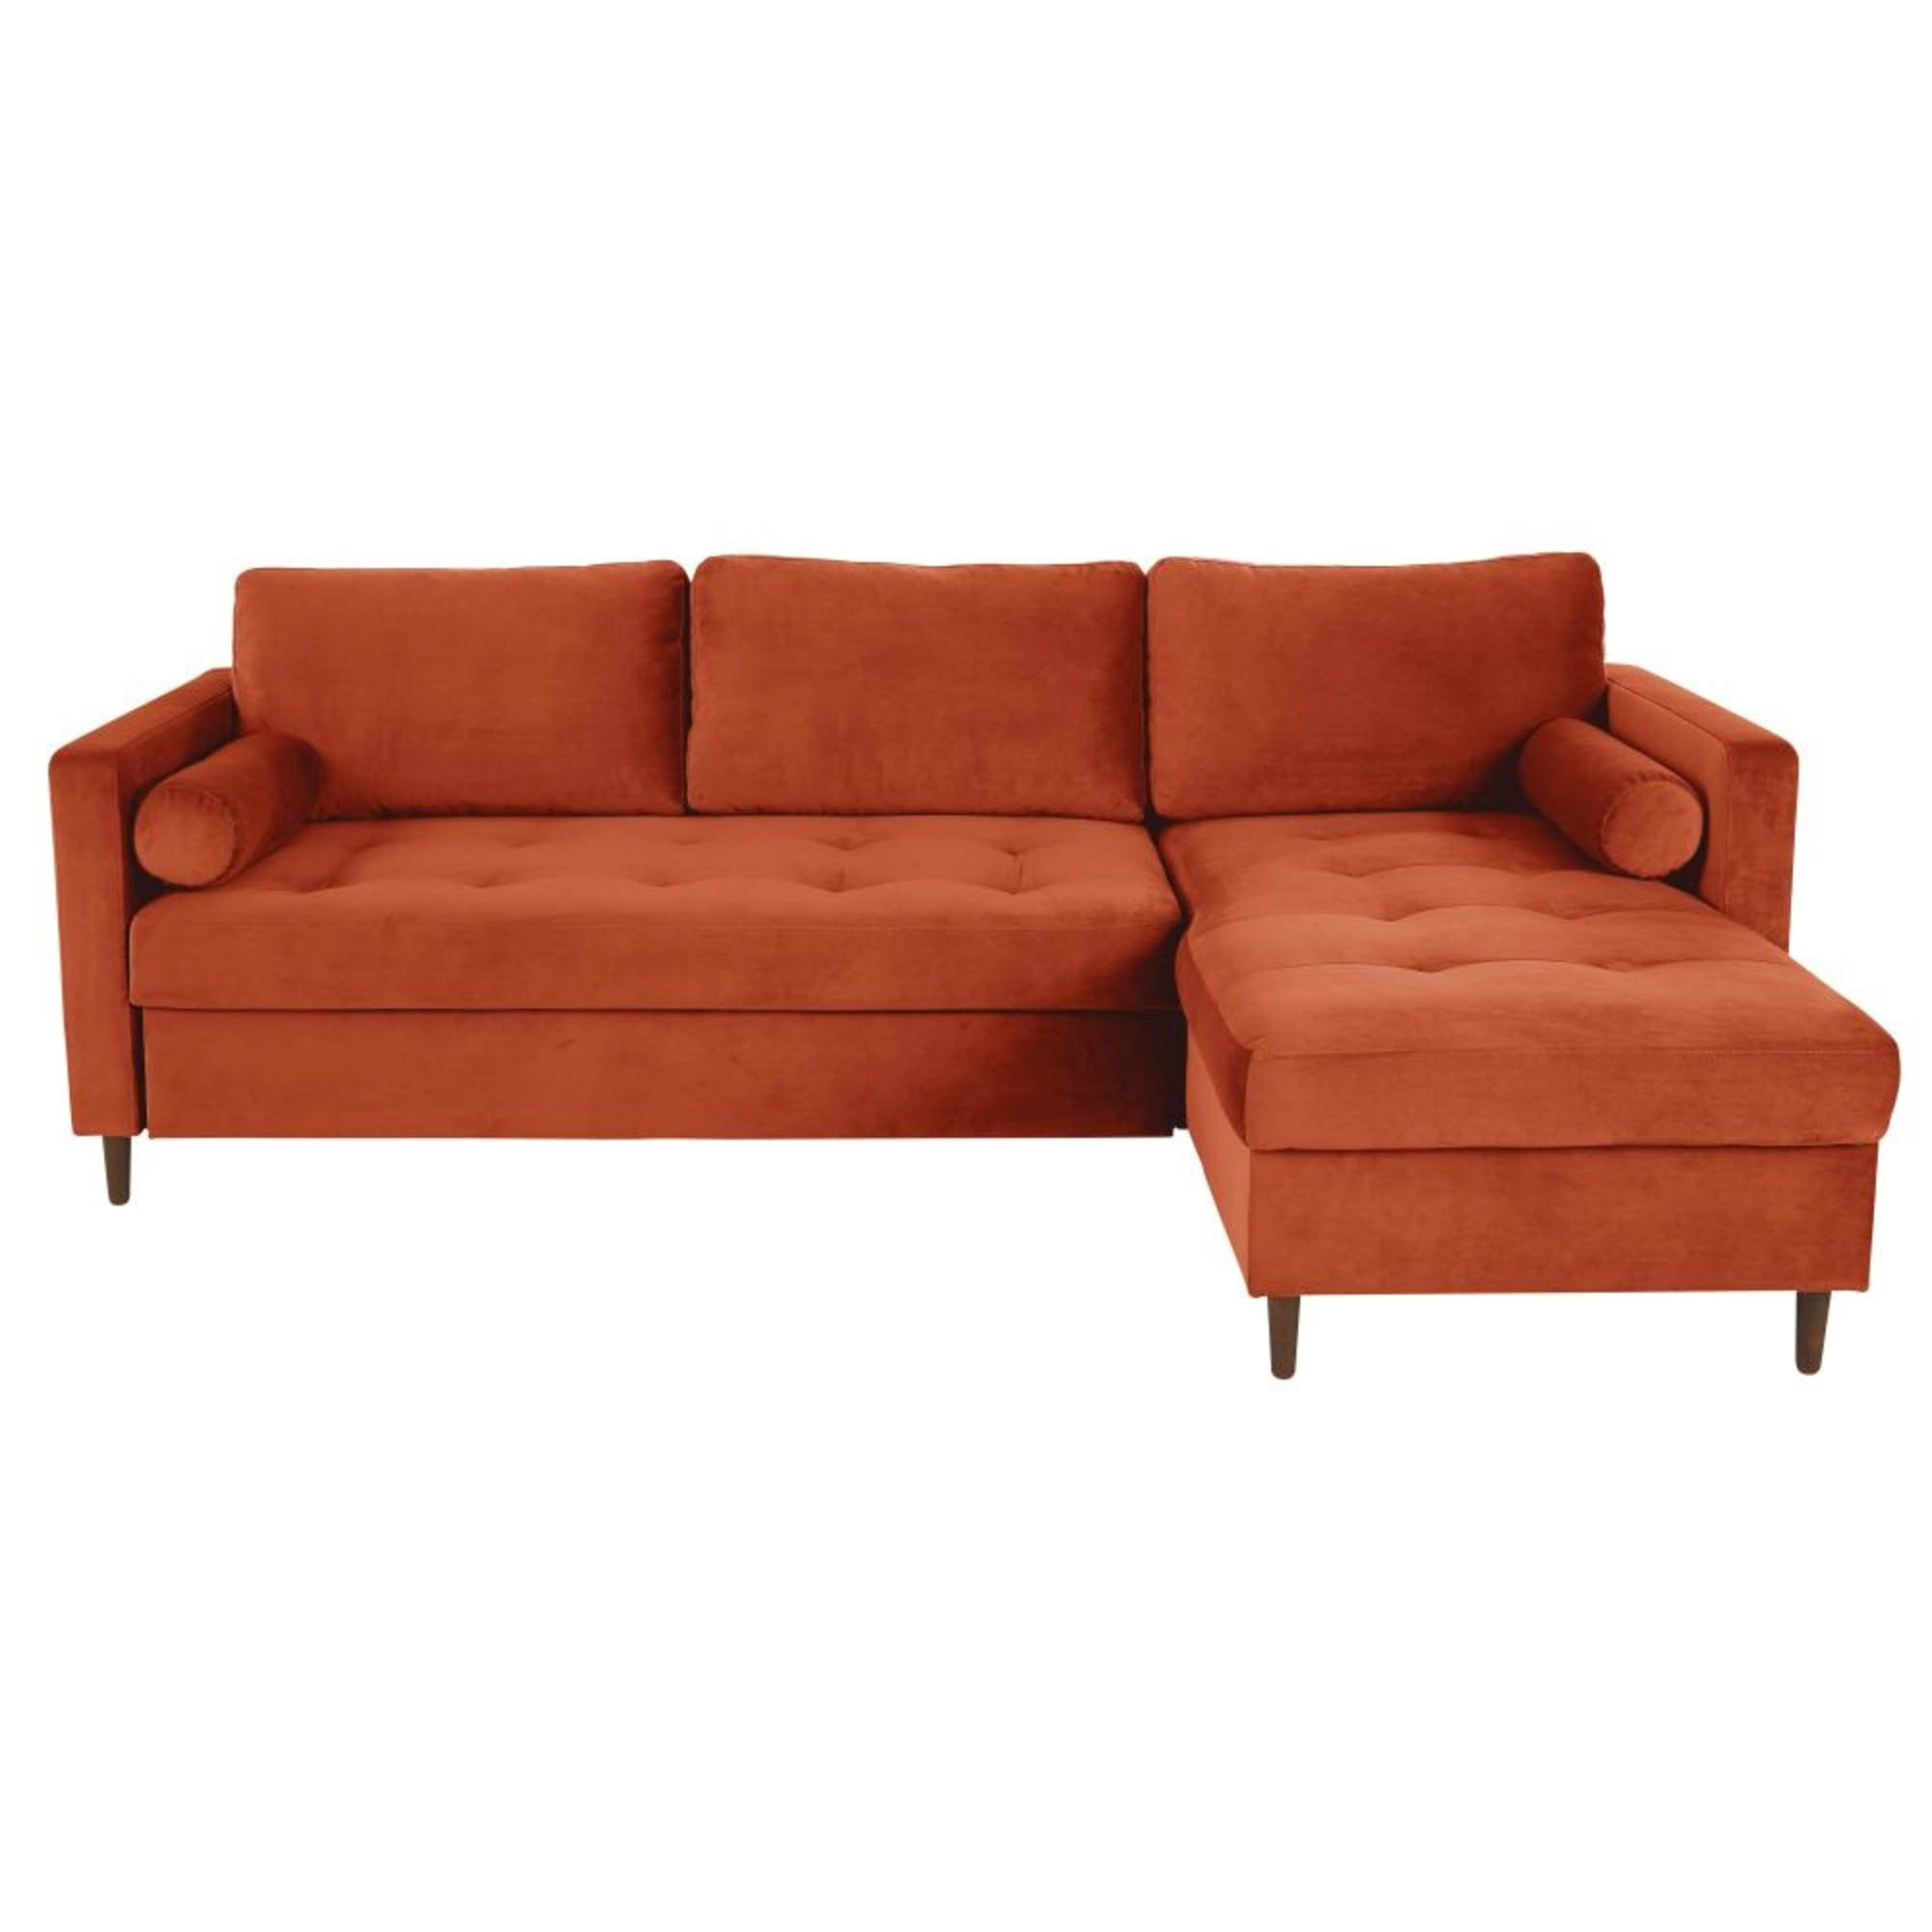 sofa-esquinero-convertible-de-4-5-plazas-de-terciopelo-naranja-mdm